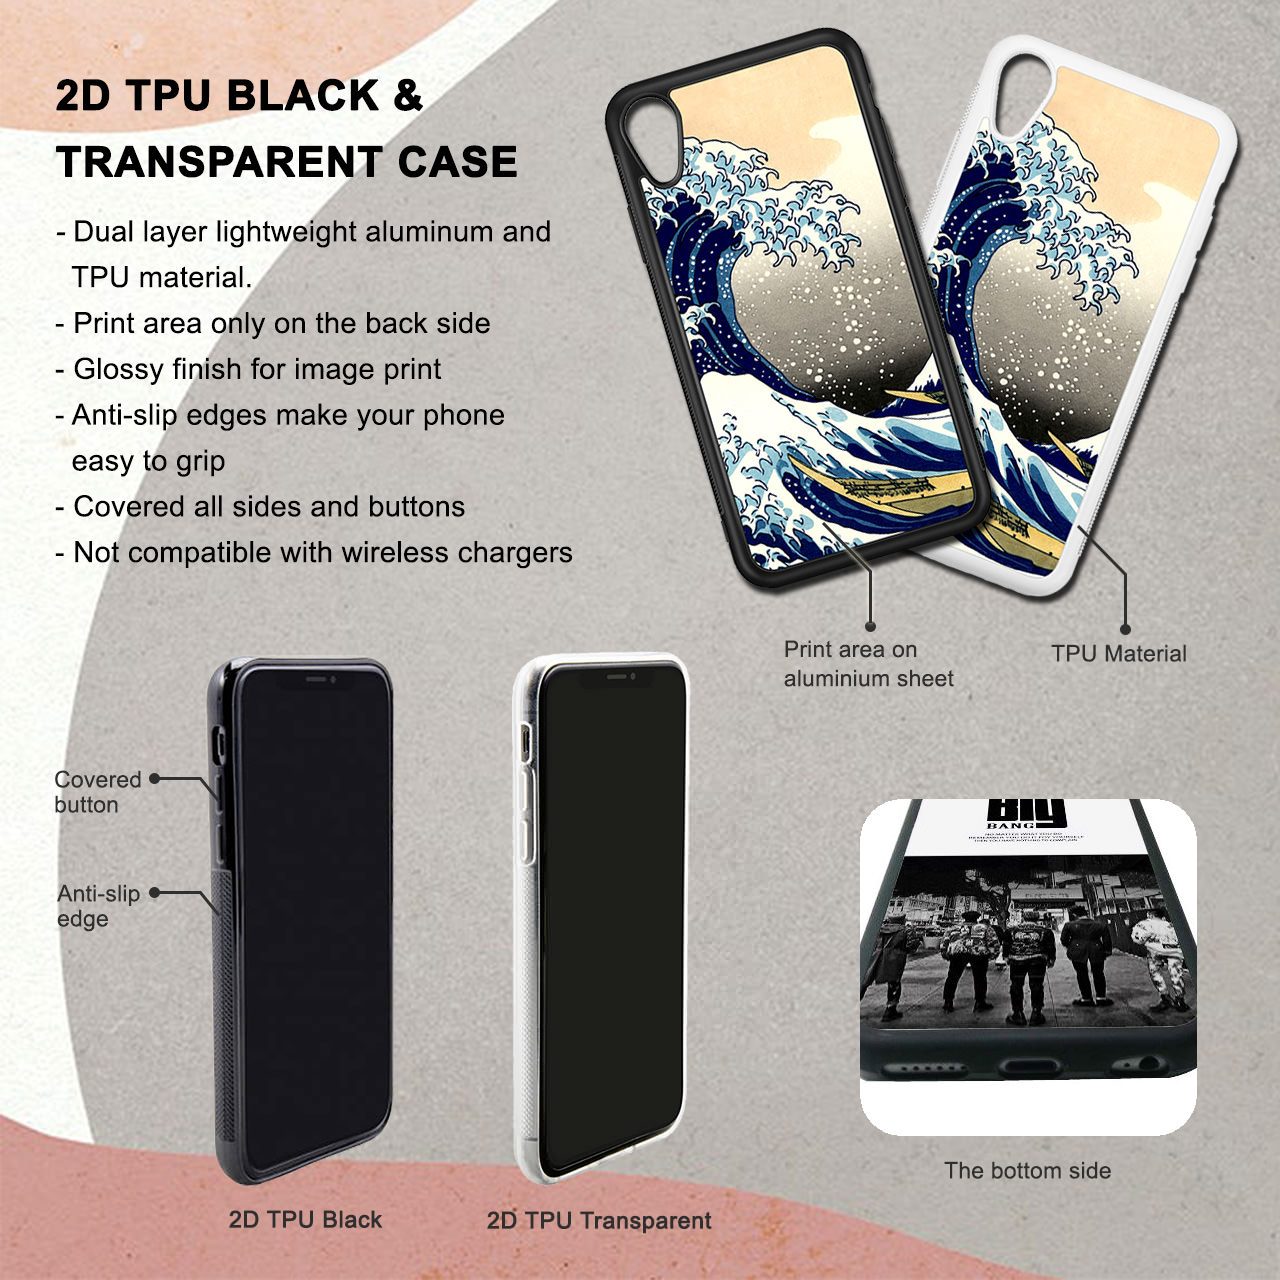 Zoro Two-Sword Style Arc Wano iPhone 6 / 6s Plus Case